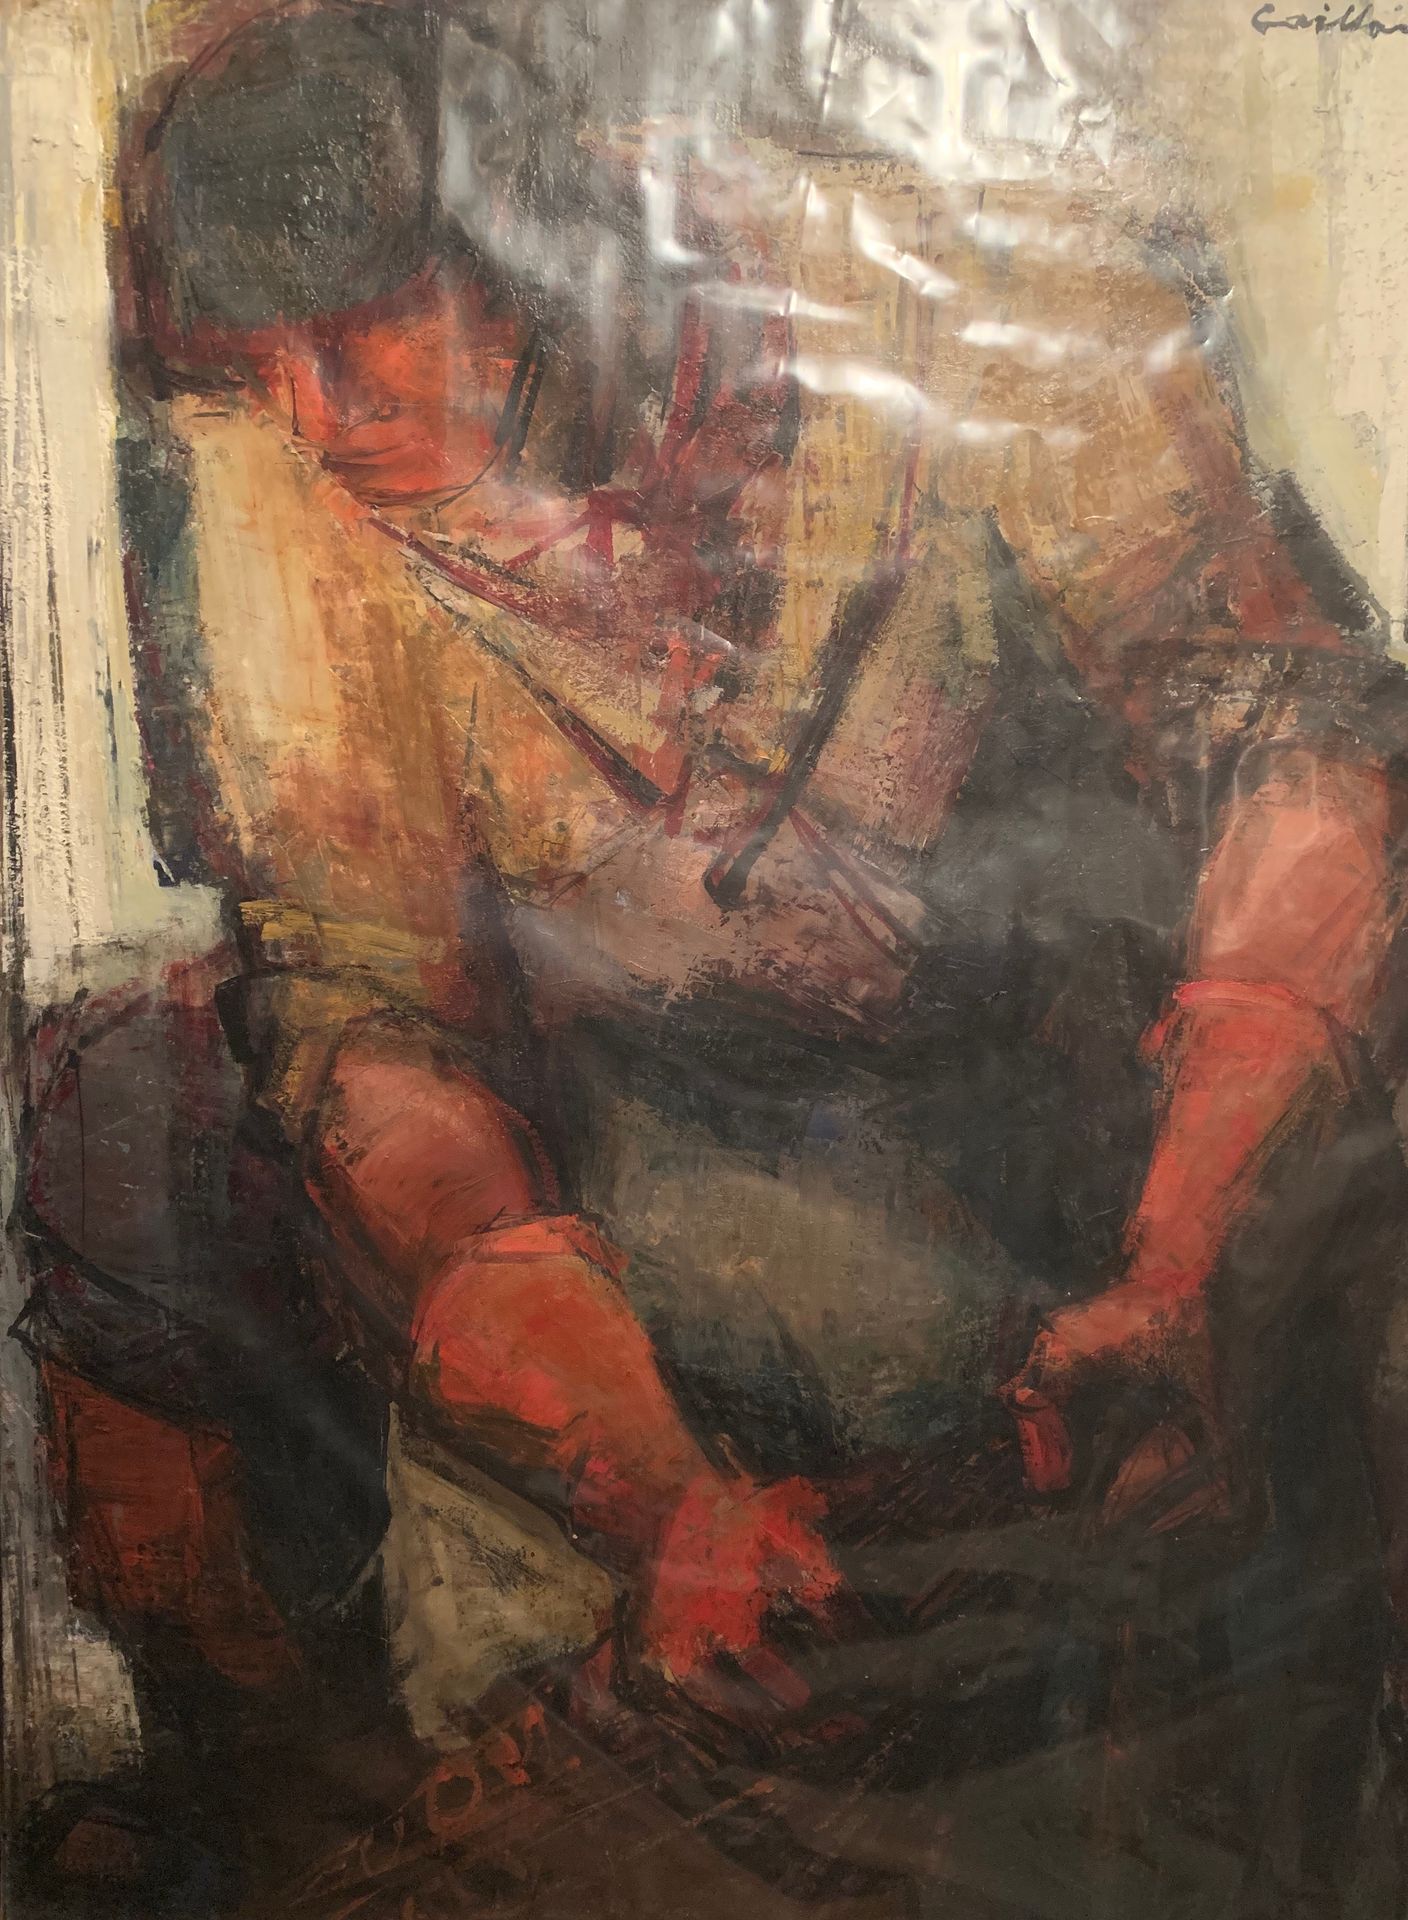 Null 罗多尔夫-凯洛（Rodolphe CAILLAUX） (1904-1989)

布赫伦

布面油画，右下角有签名

130 x 97 cm